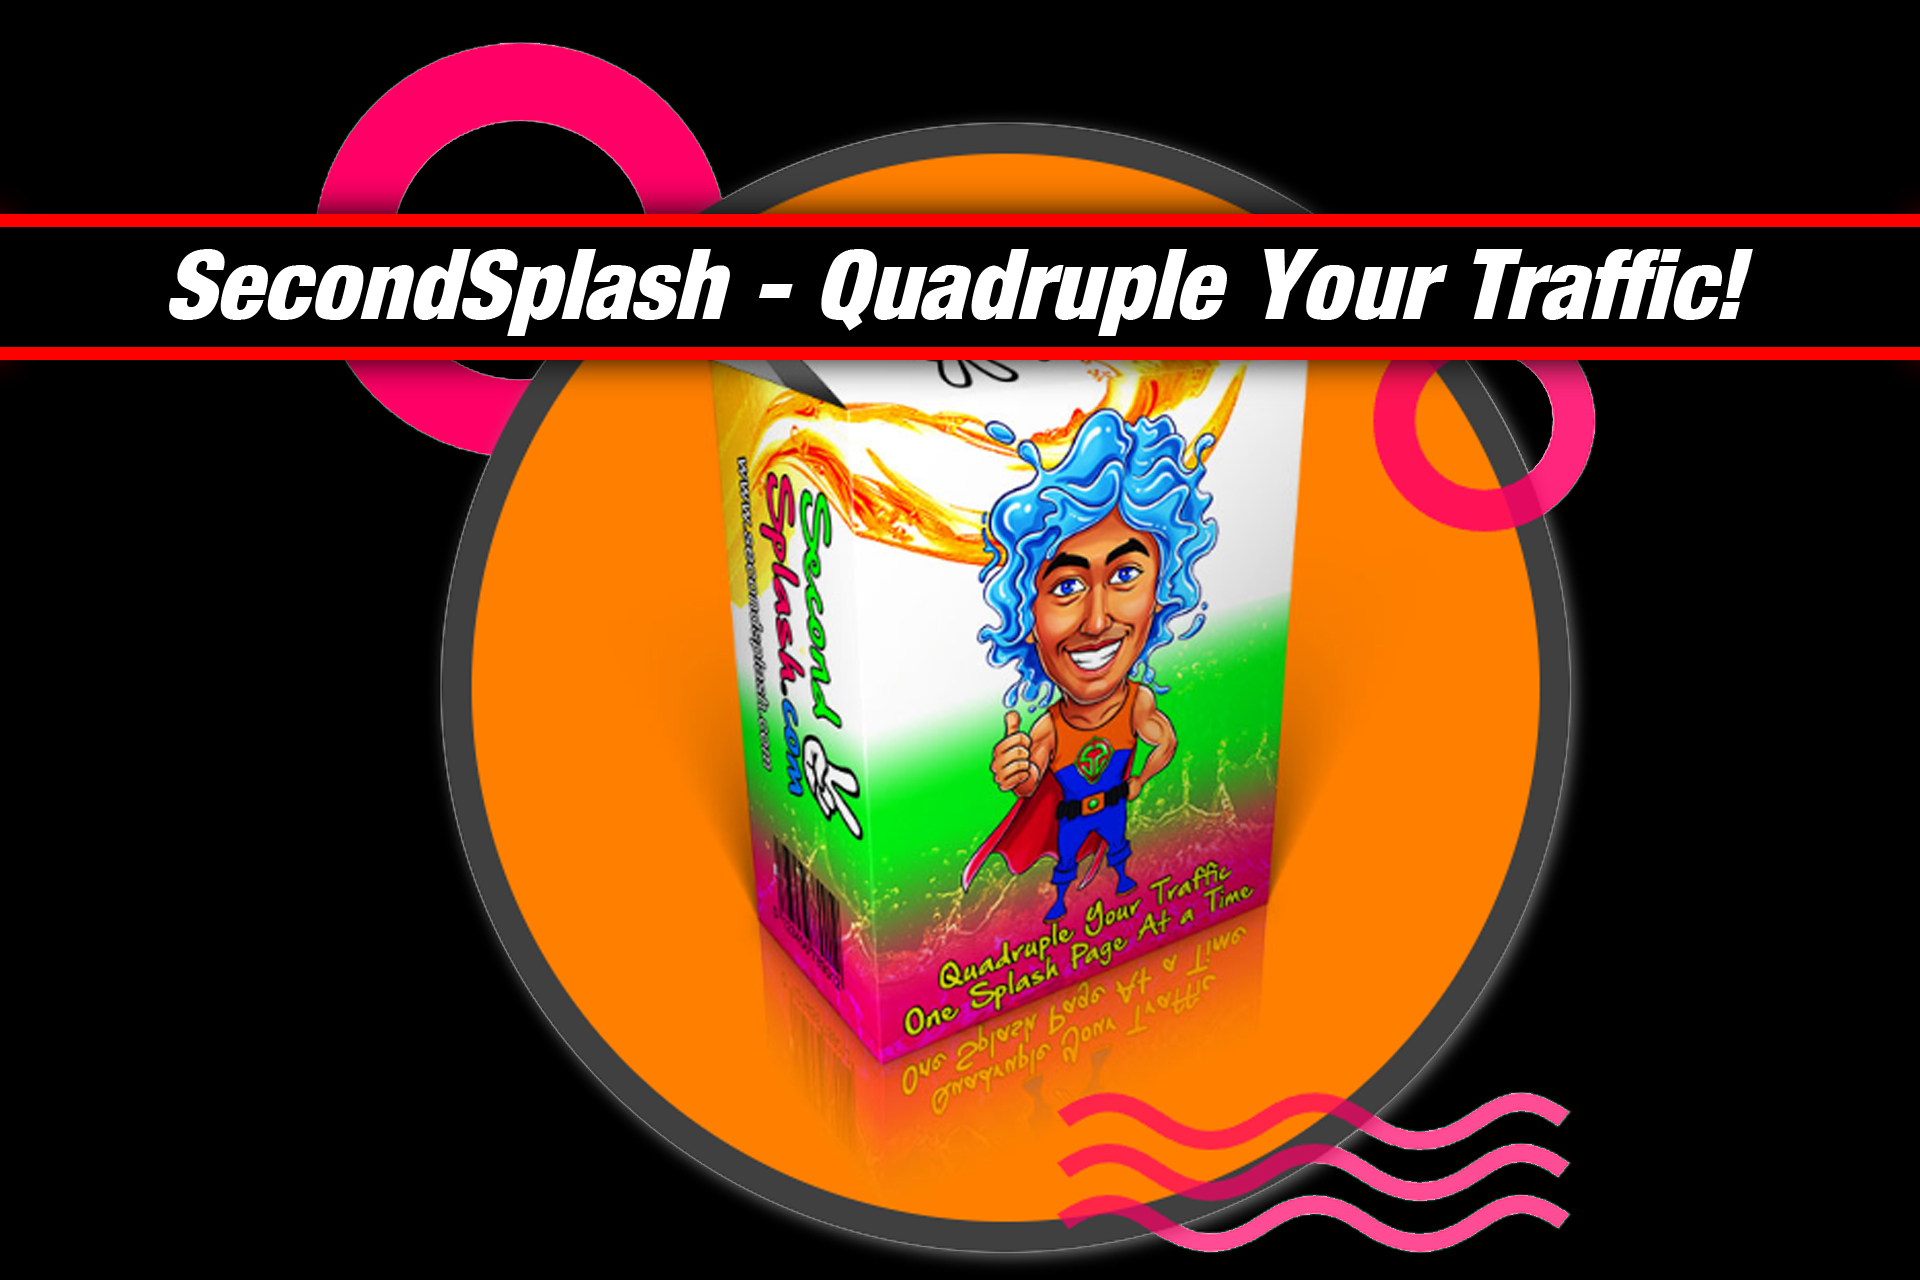 SecondSplash - Quadruple Your Traffic